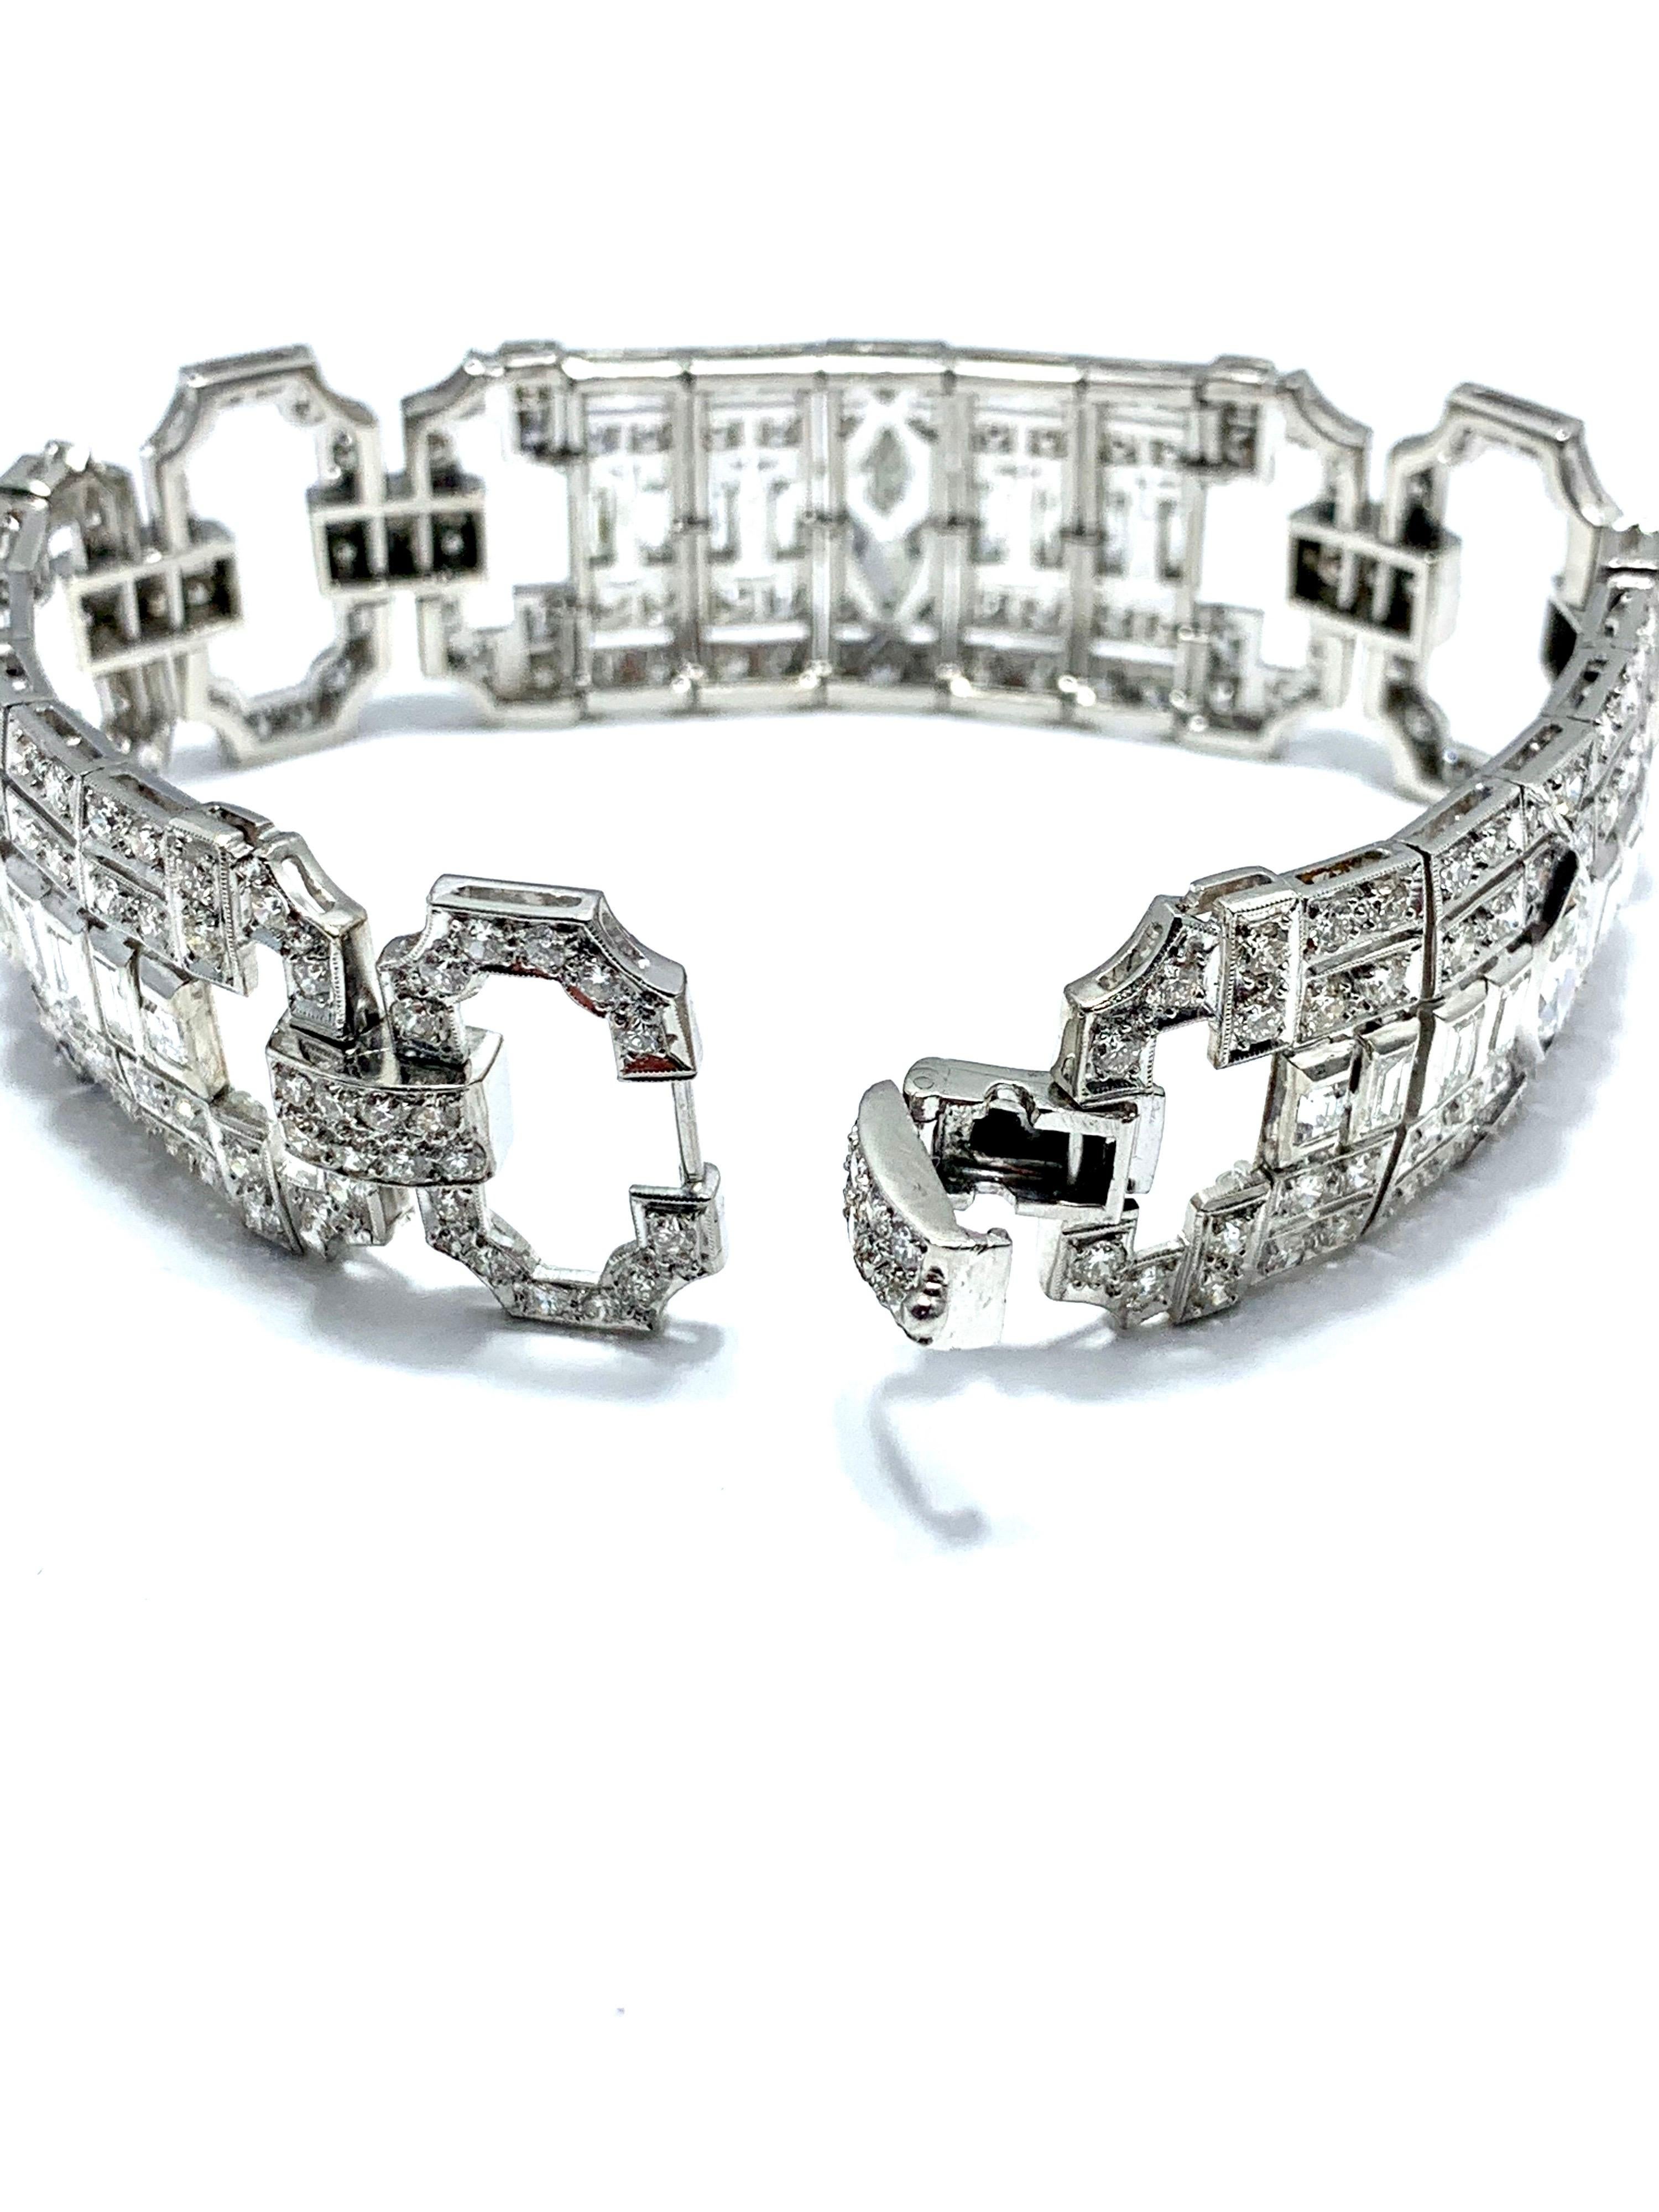 10.25 Carat Art Deco Style Diamond and Platinum Bracelet 3